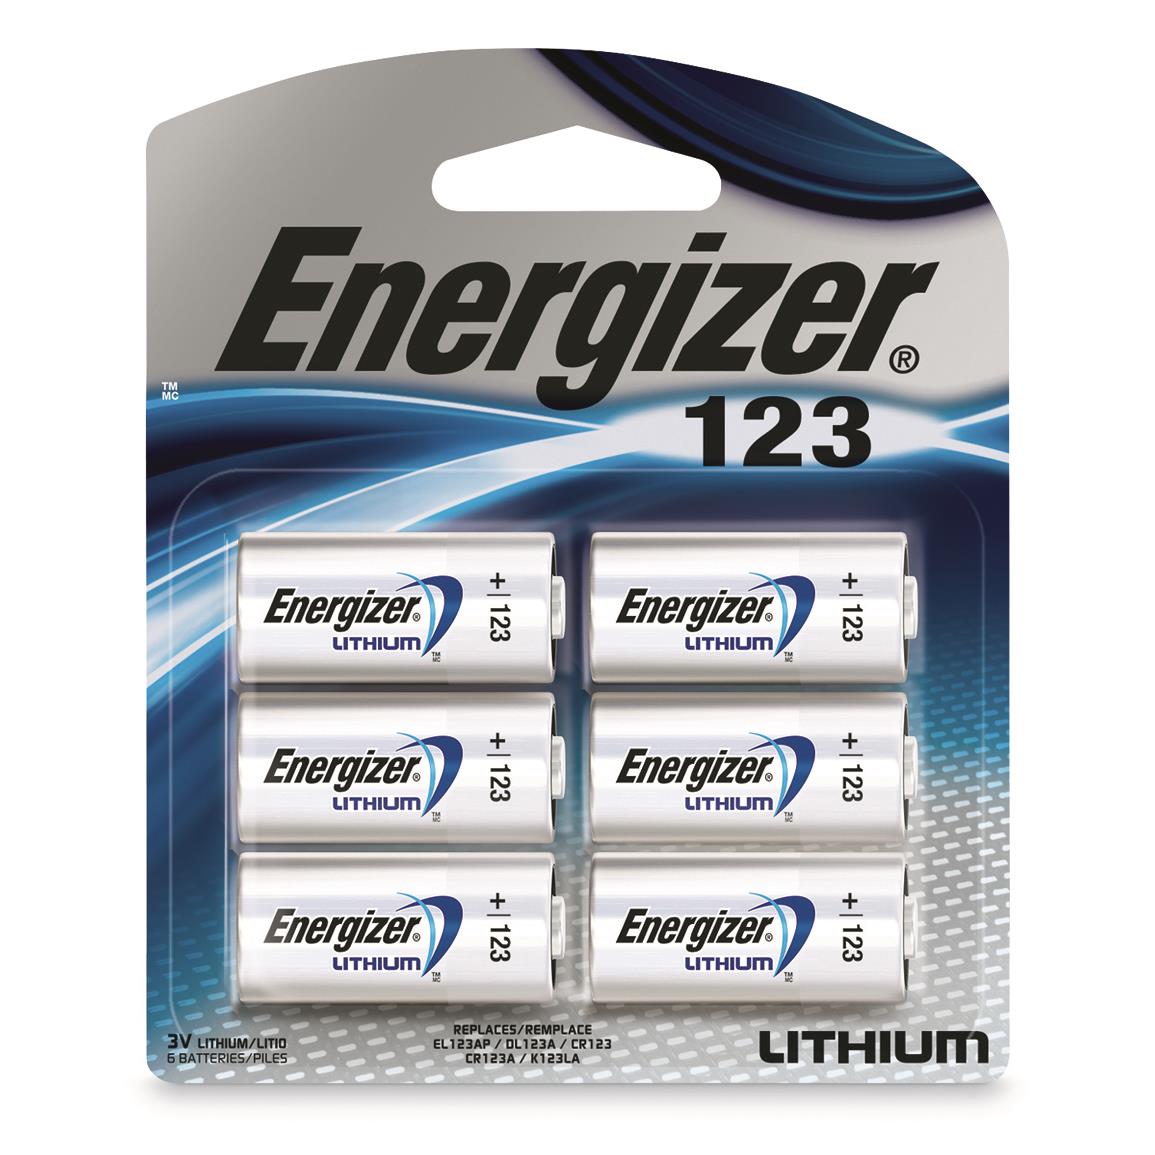 Energizer Lithium CR123 Batteries, 6 Pack